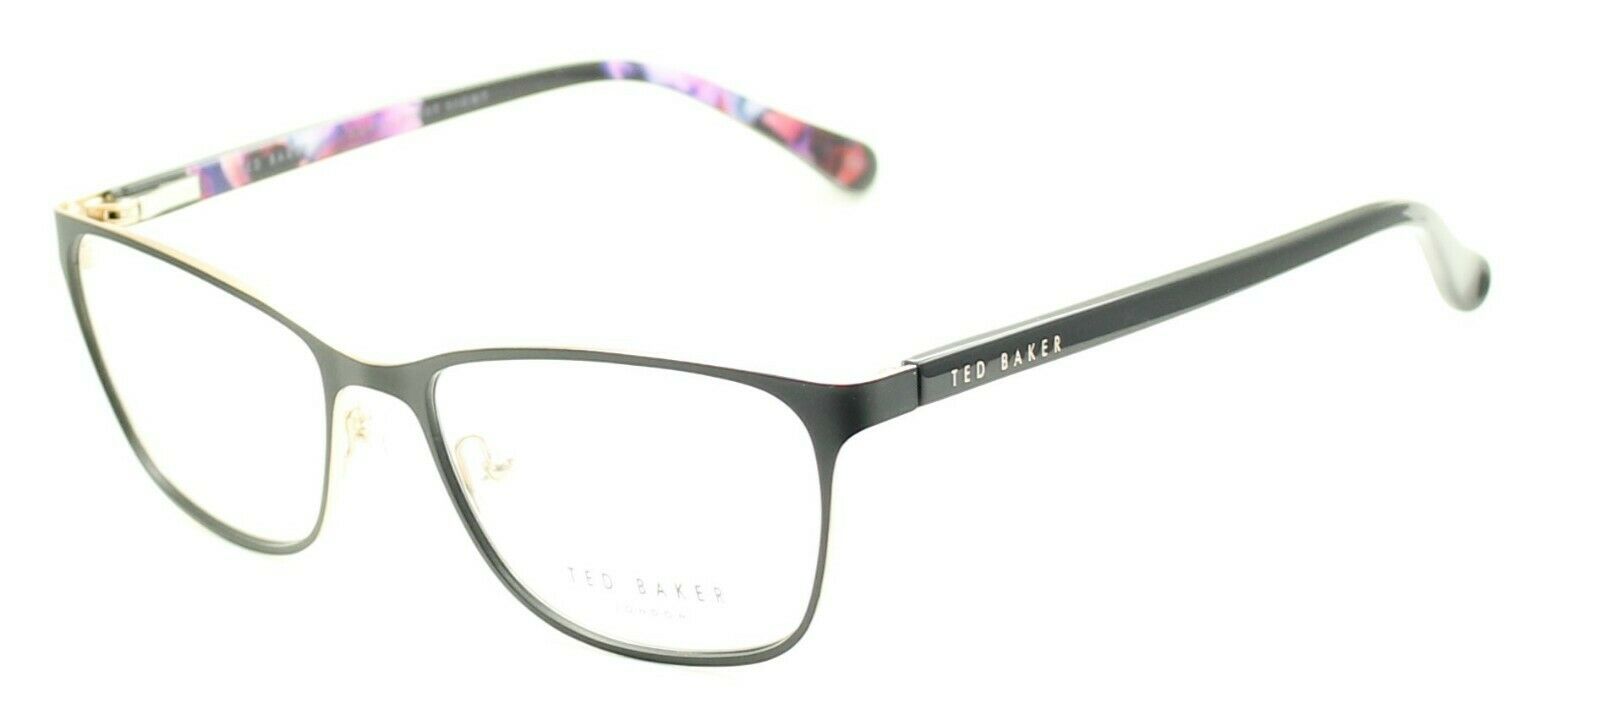 TED BAKER 2229 004 Bree 54mm Eyewear FRAMES Glasses RX Optical Eyeglasses - New